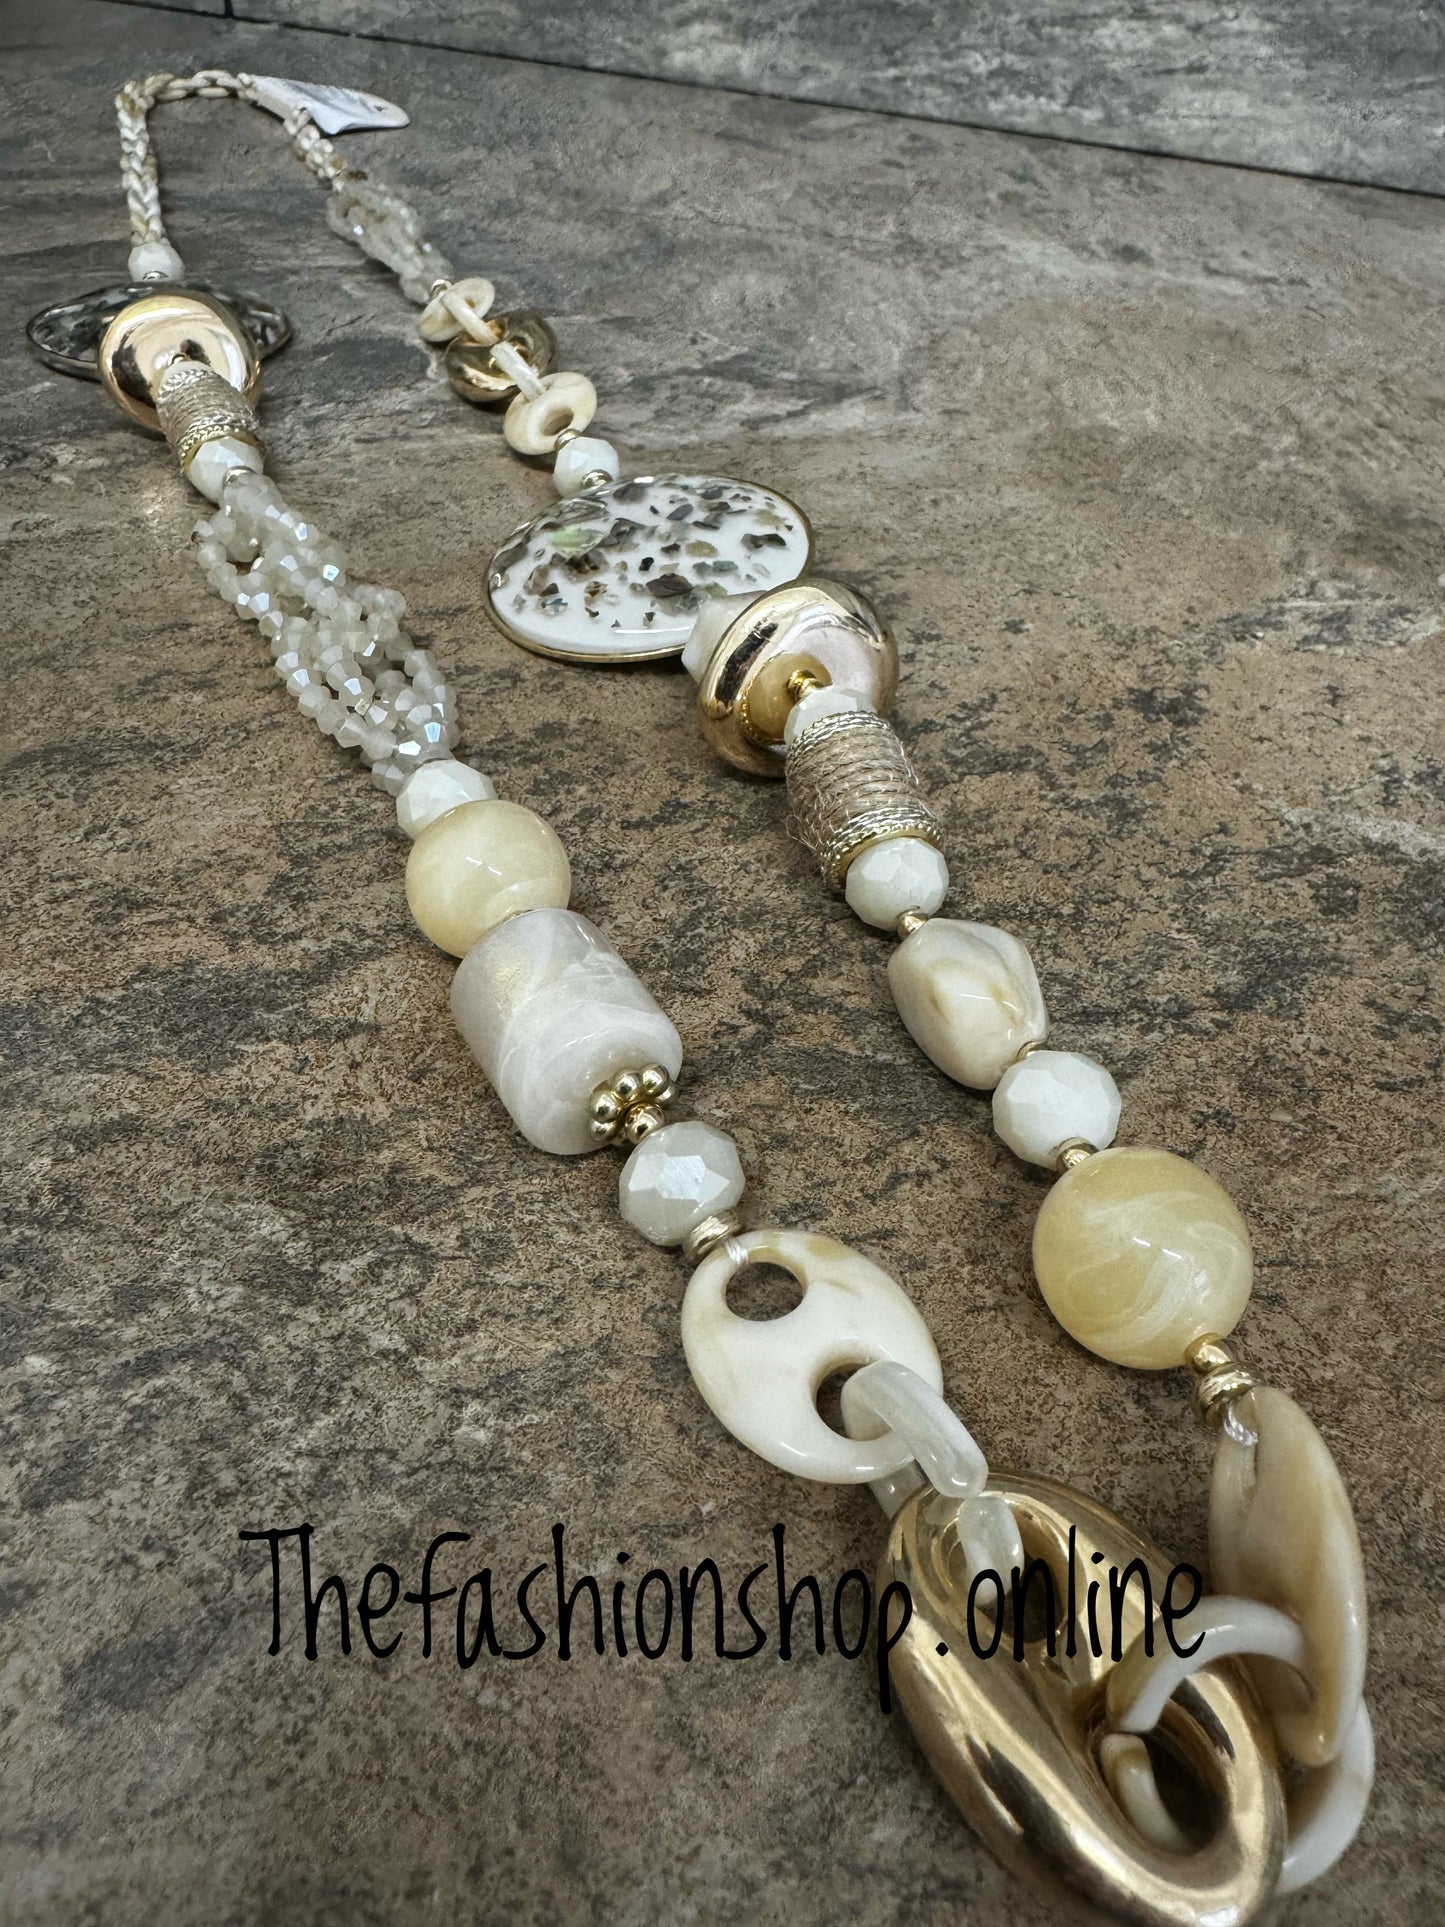 Stone stunning statement necklace